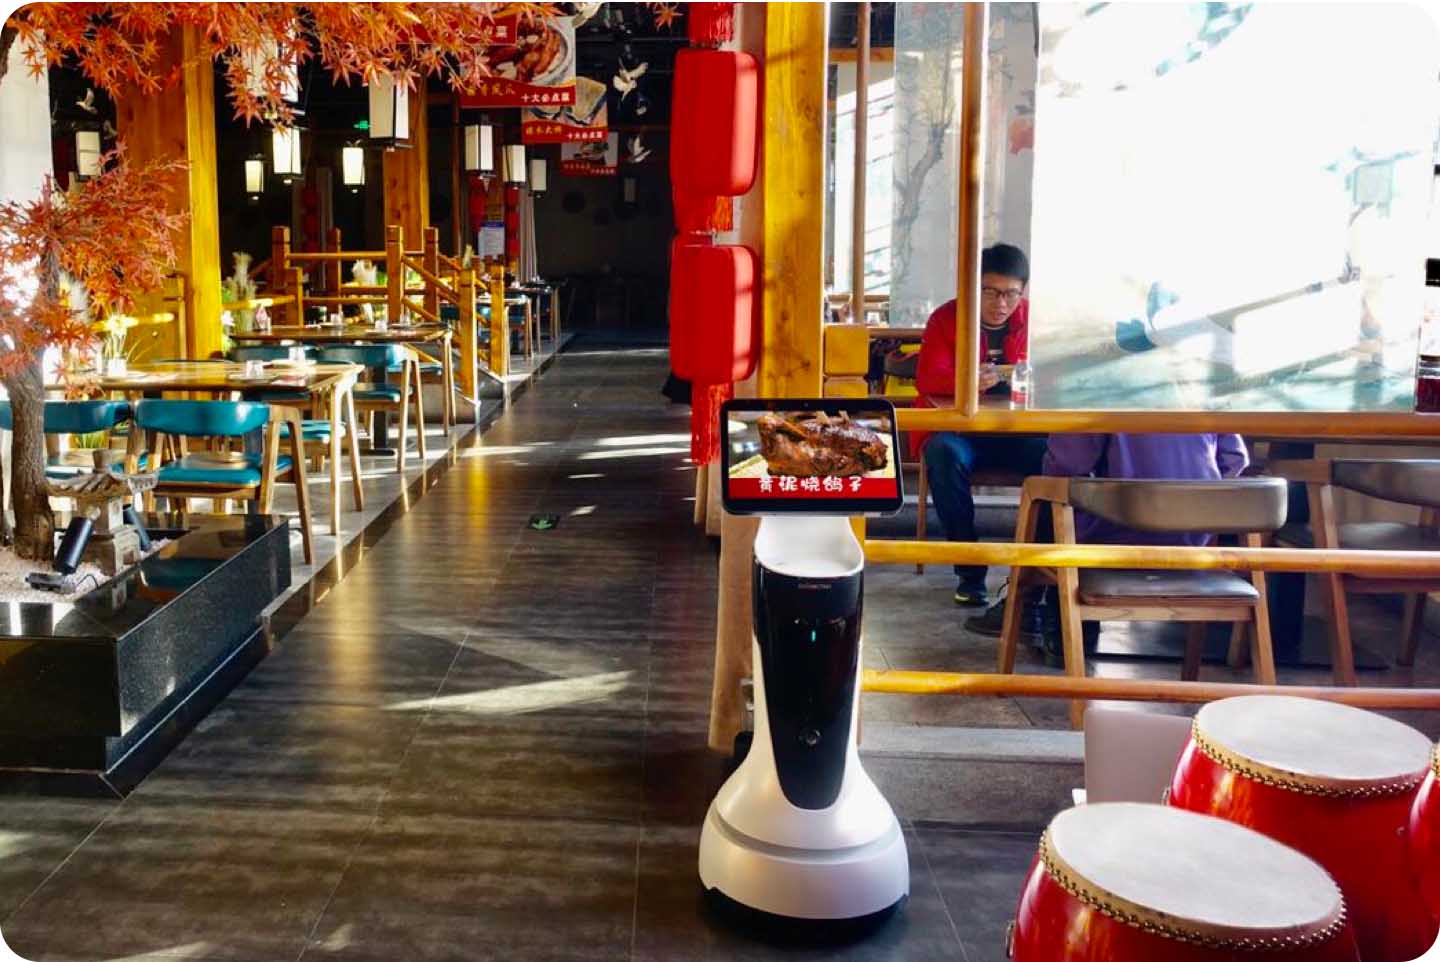 AI reception robot